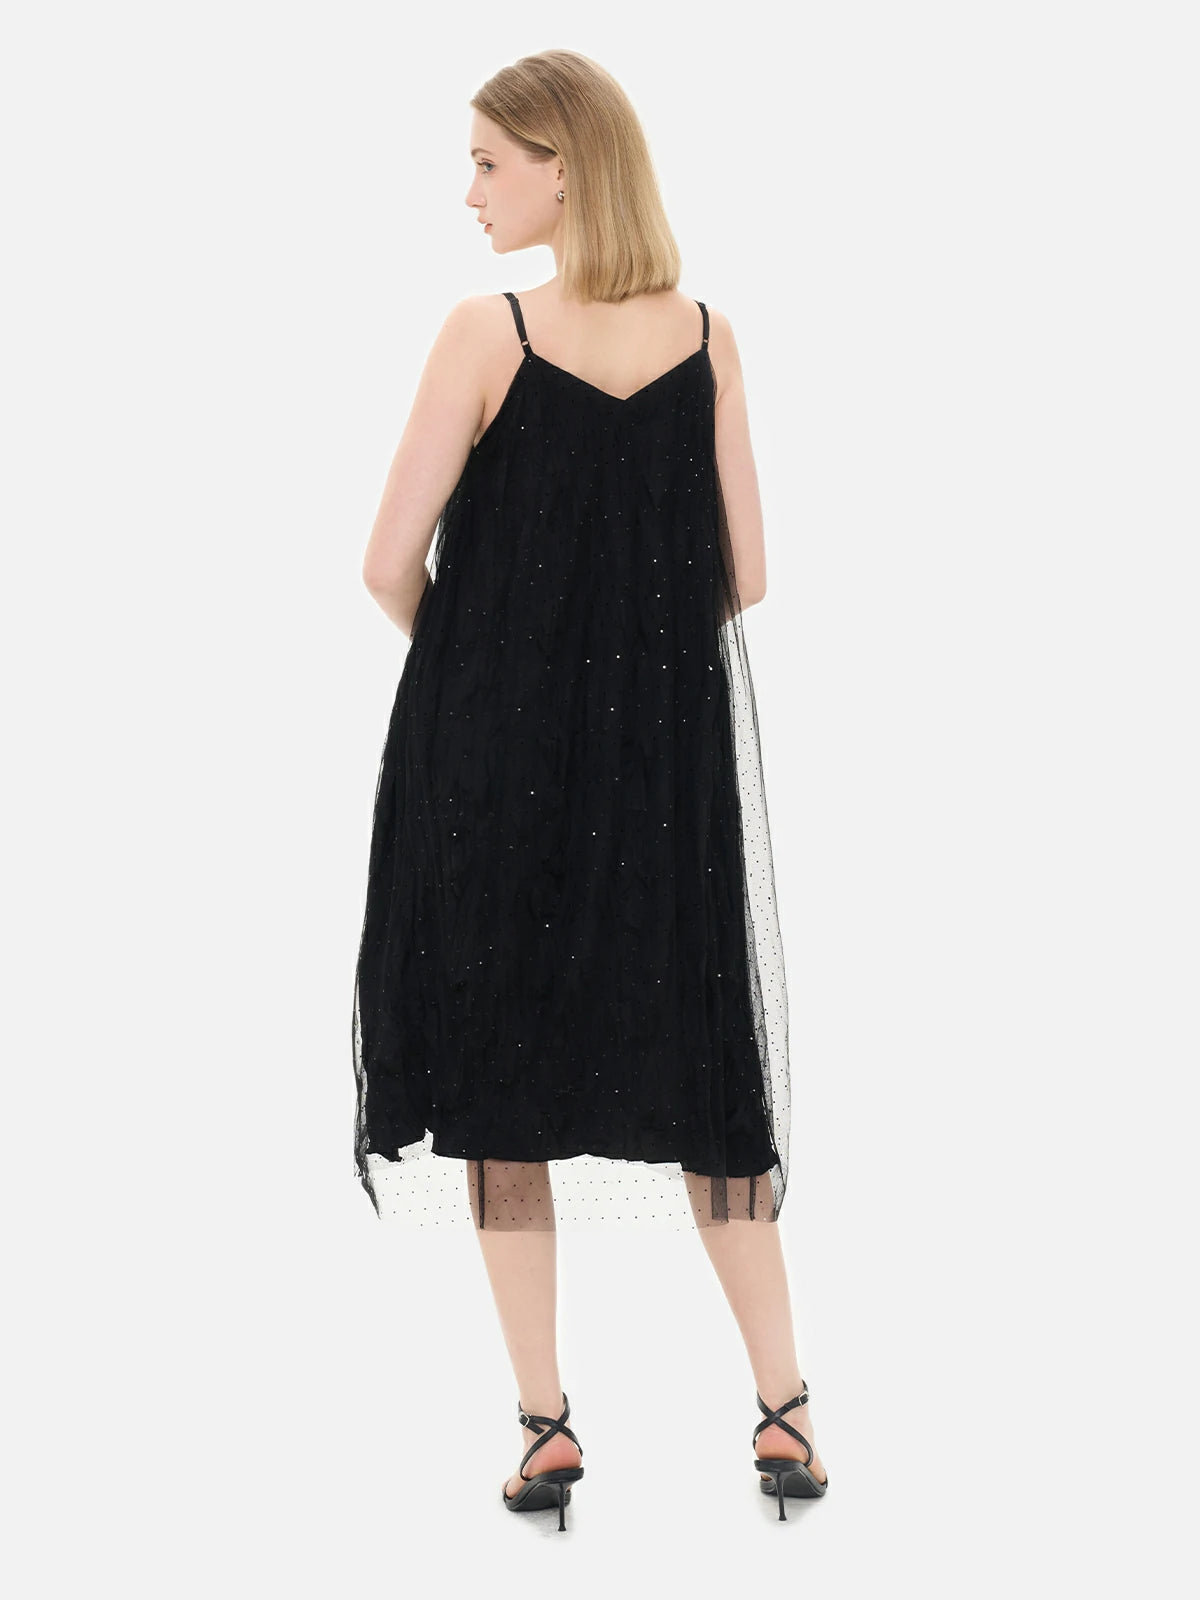 Sparkling black mesh overlay on V-neck spaghetti strap dress with pleated inner layer